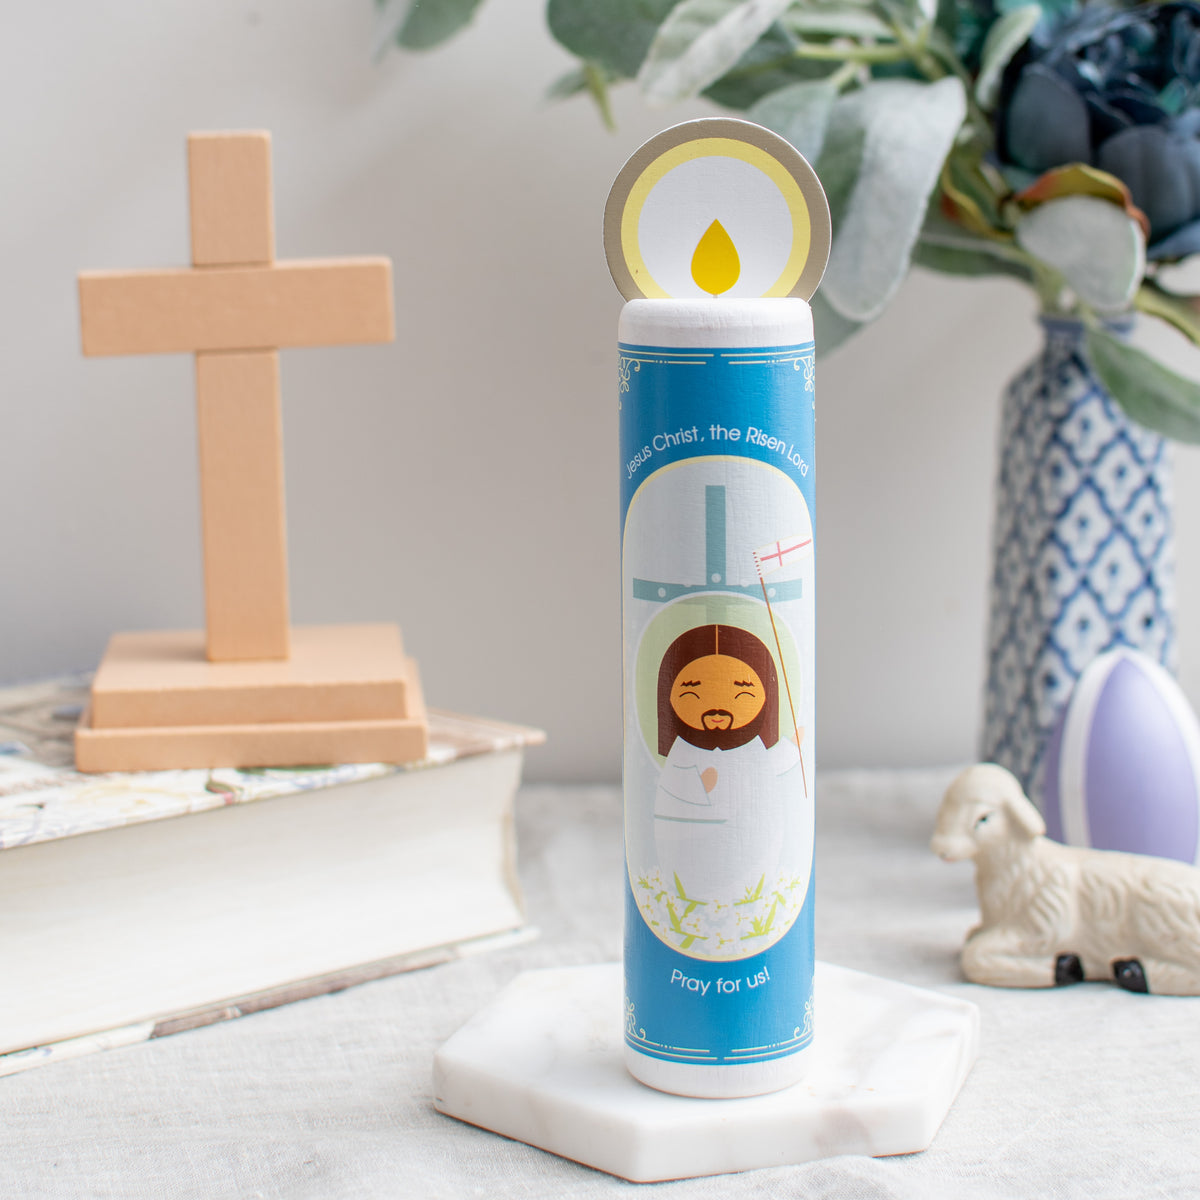 Mini Prayer Candle – Risen Candle Co.